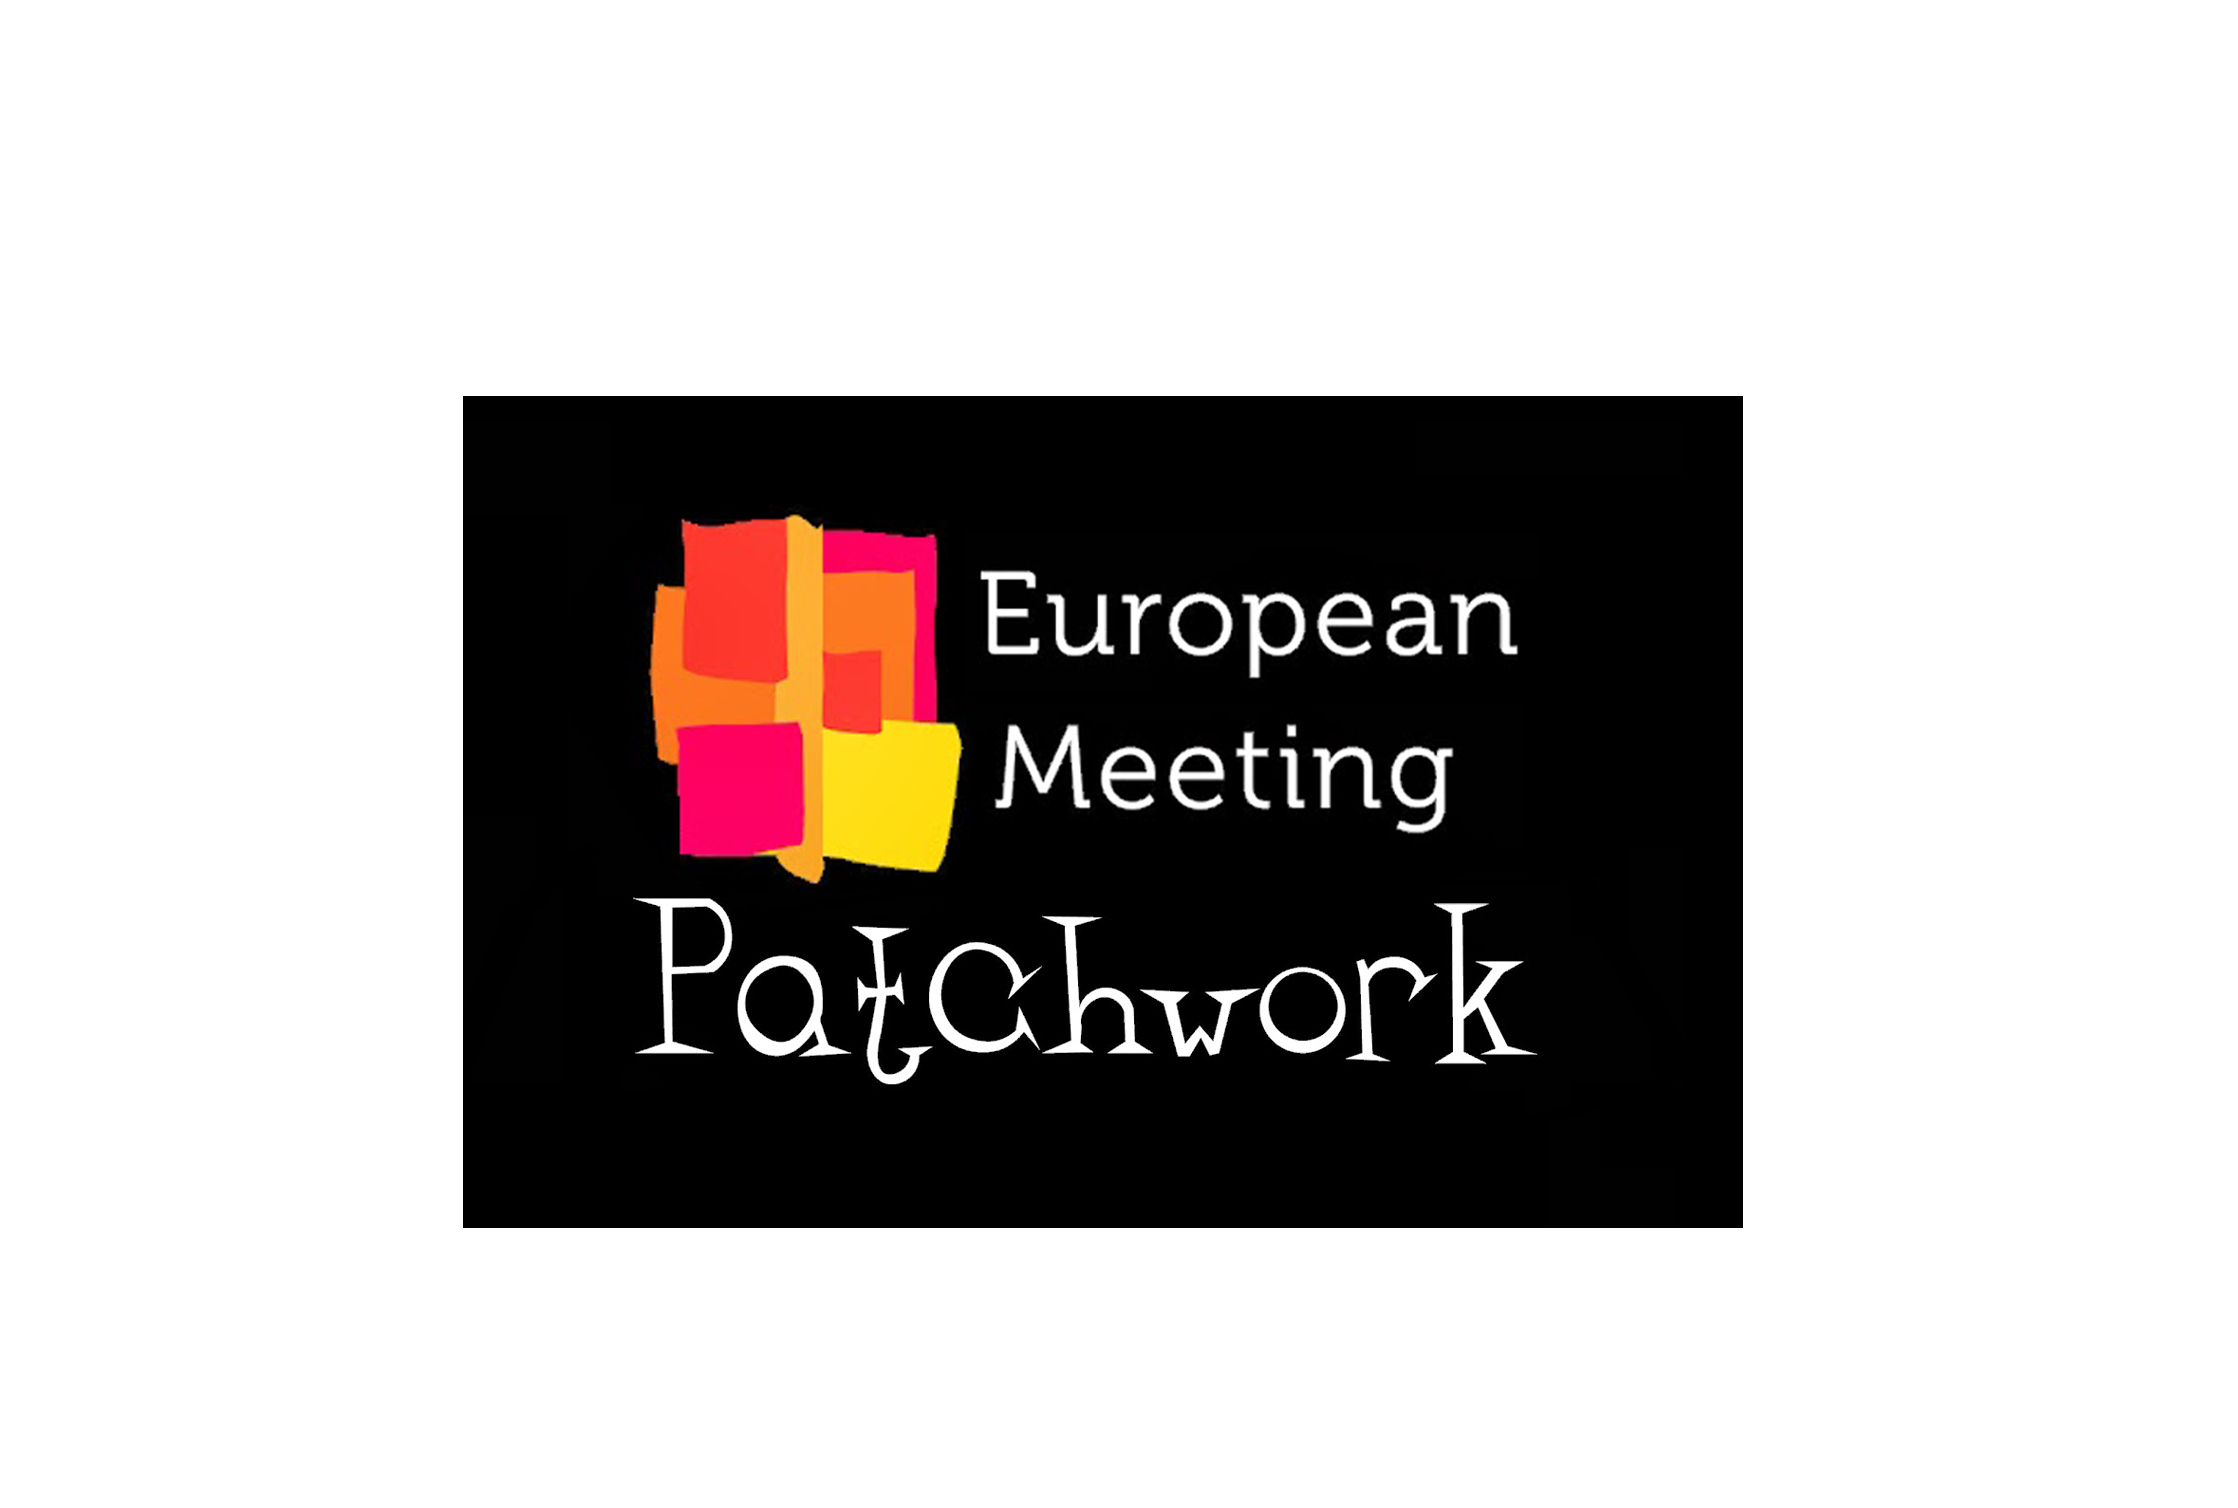 Patchworck14_logo-02 copy.jpg